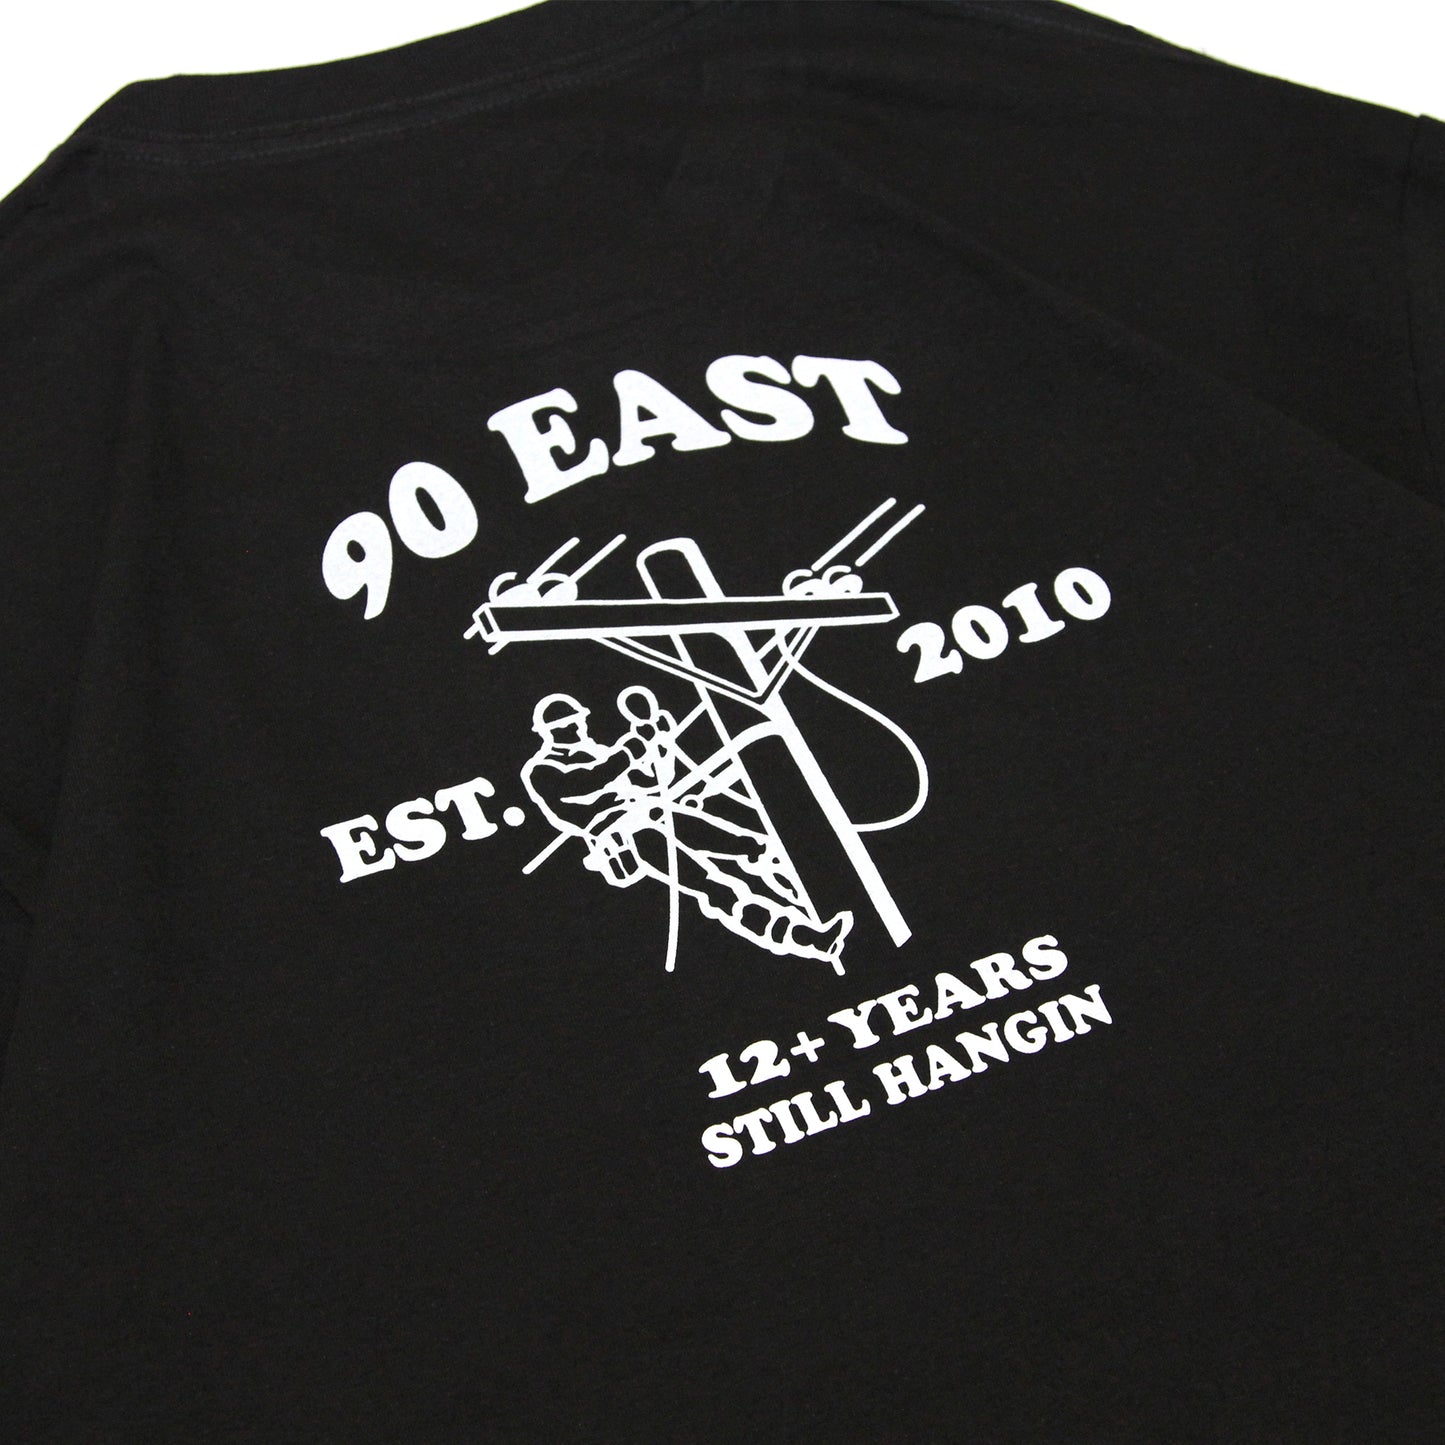 90EAST - Hanging T-Shirt/Black